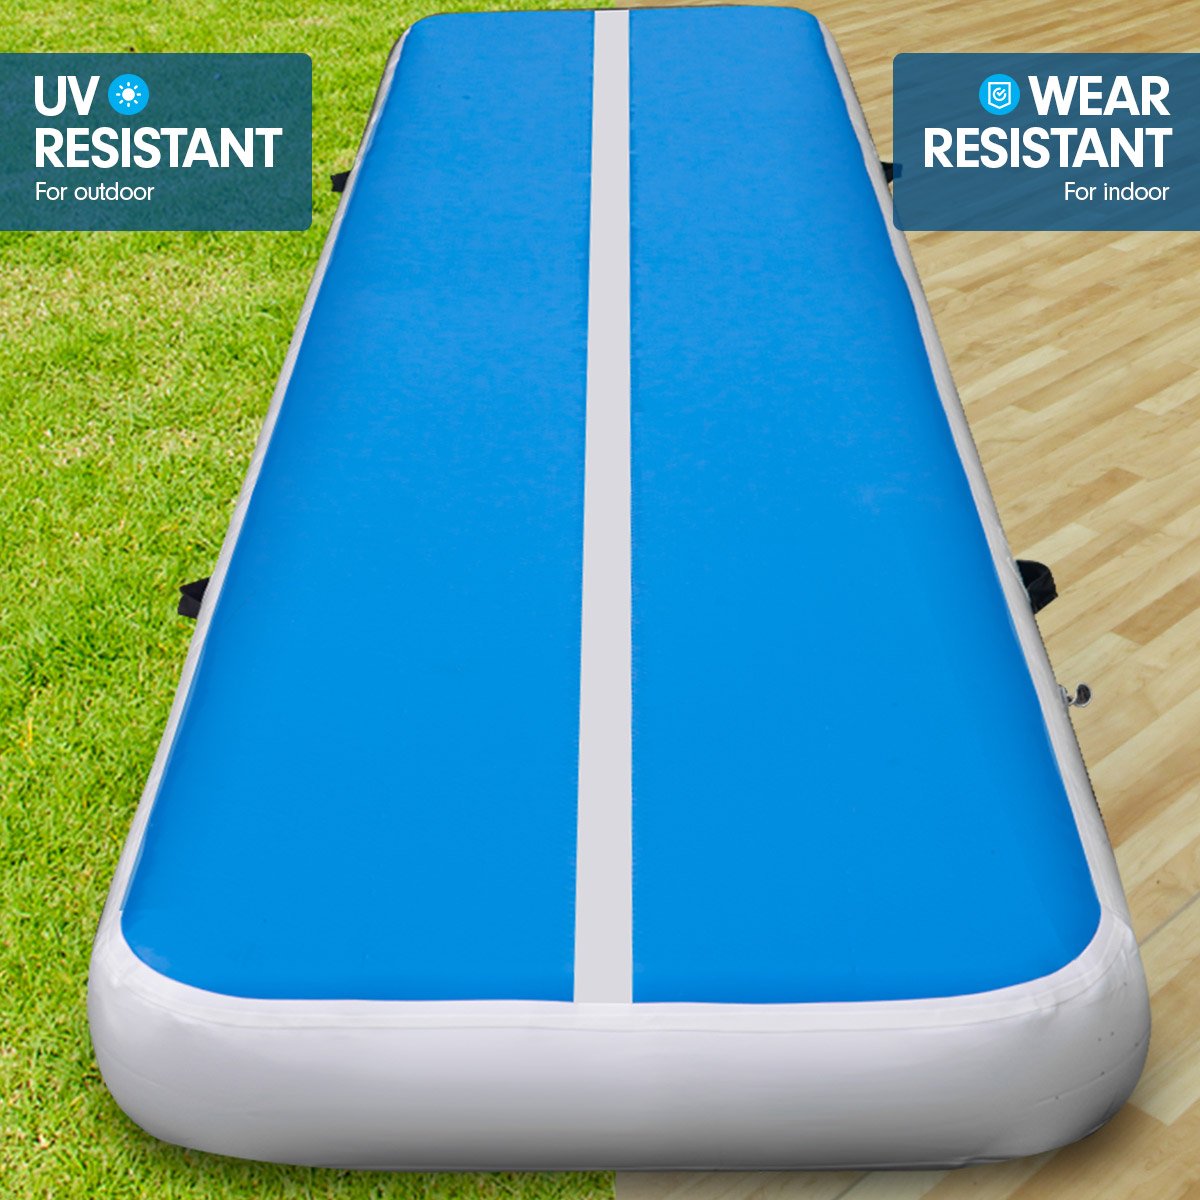 4m x 1m Air Track Inflatable Tumbling Gymnastics Mat - Blue White